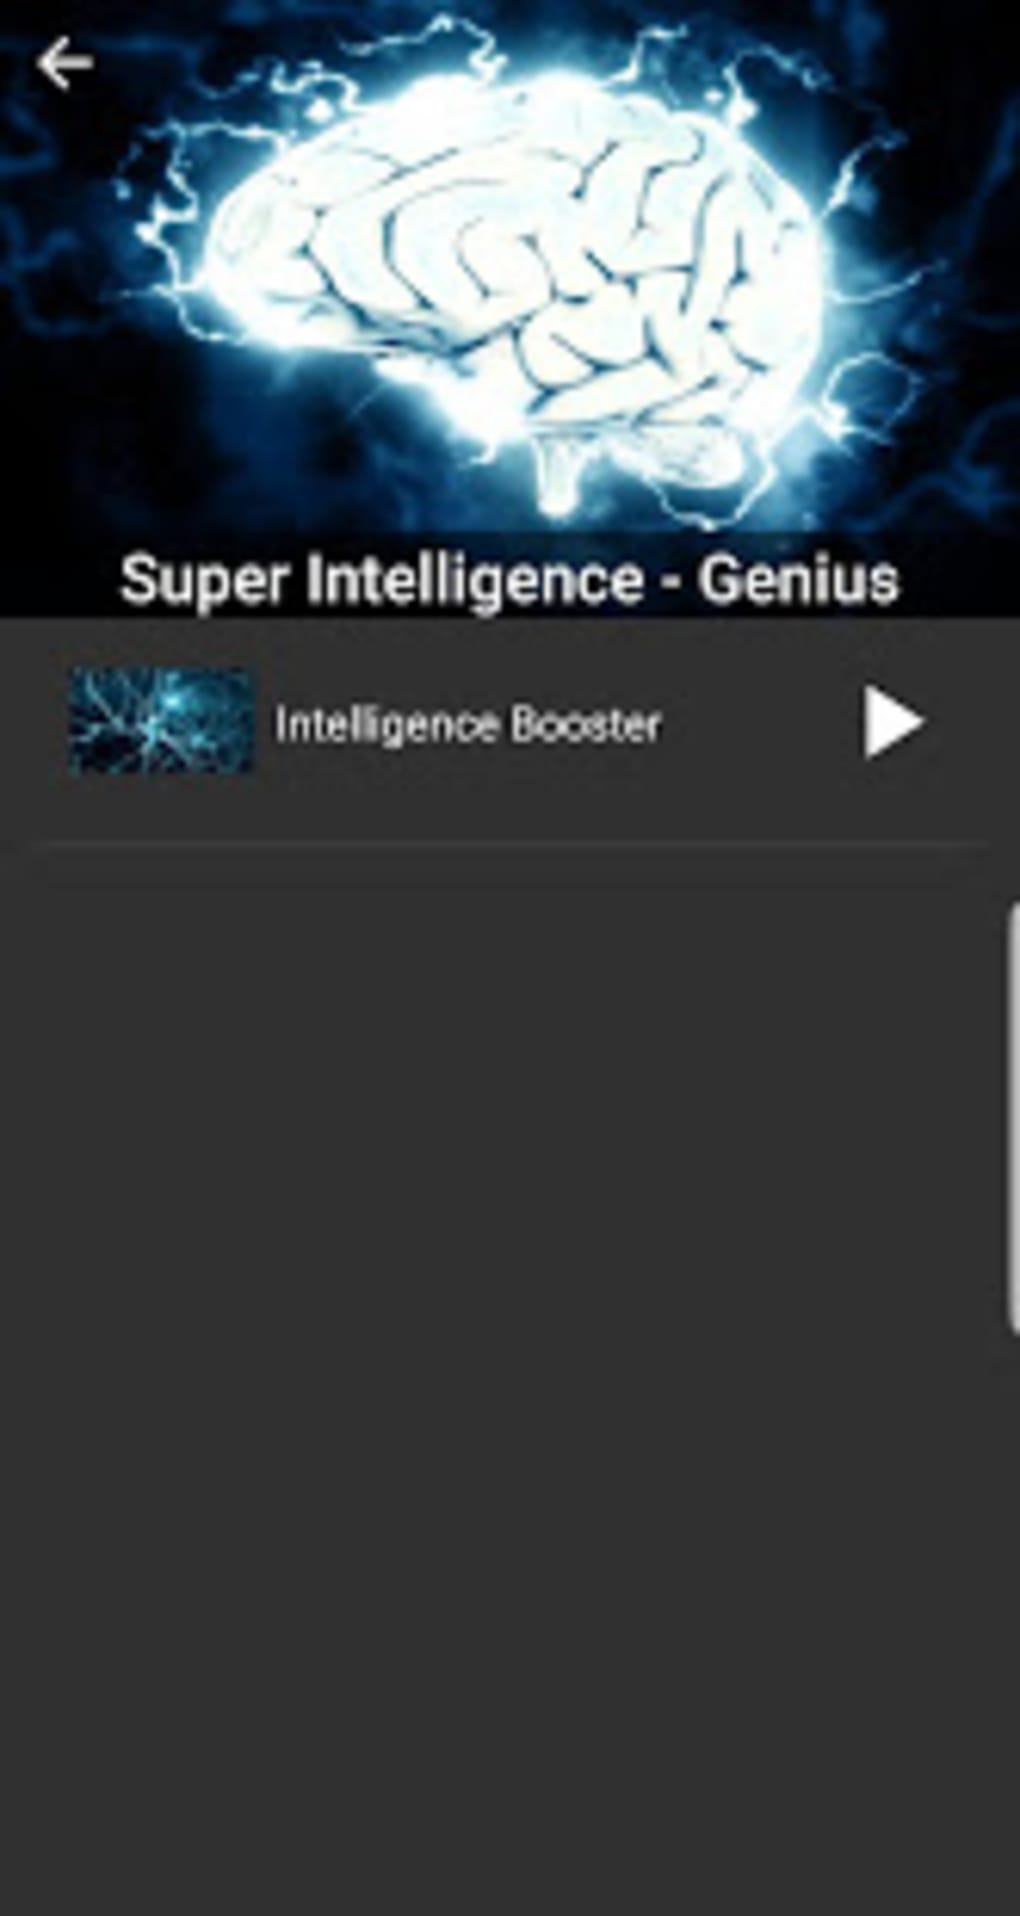 download ultimate brain booster app free